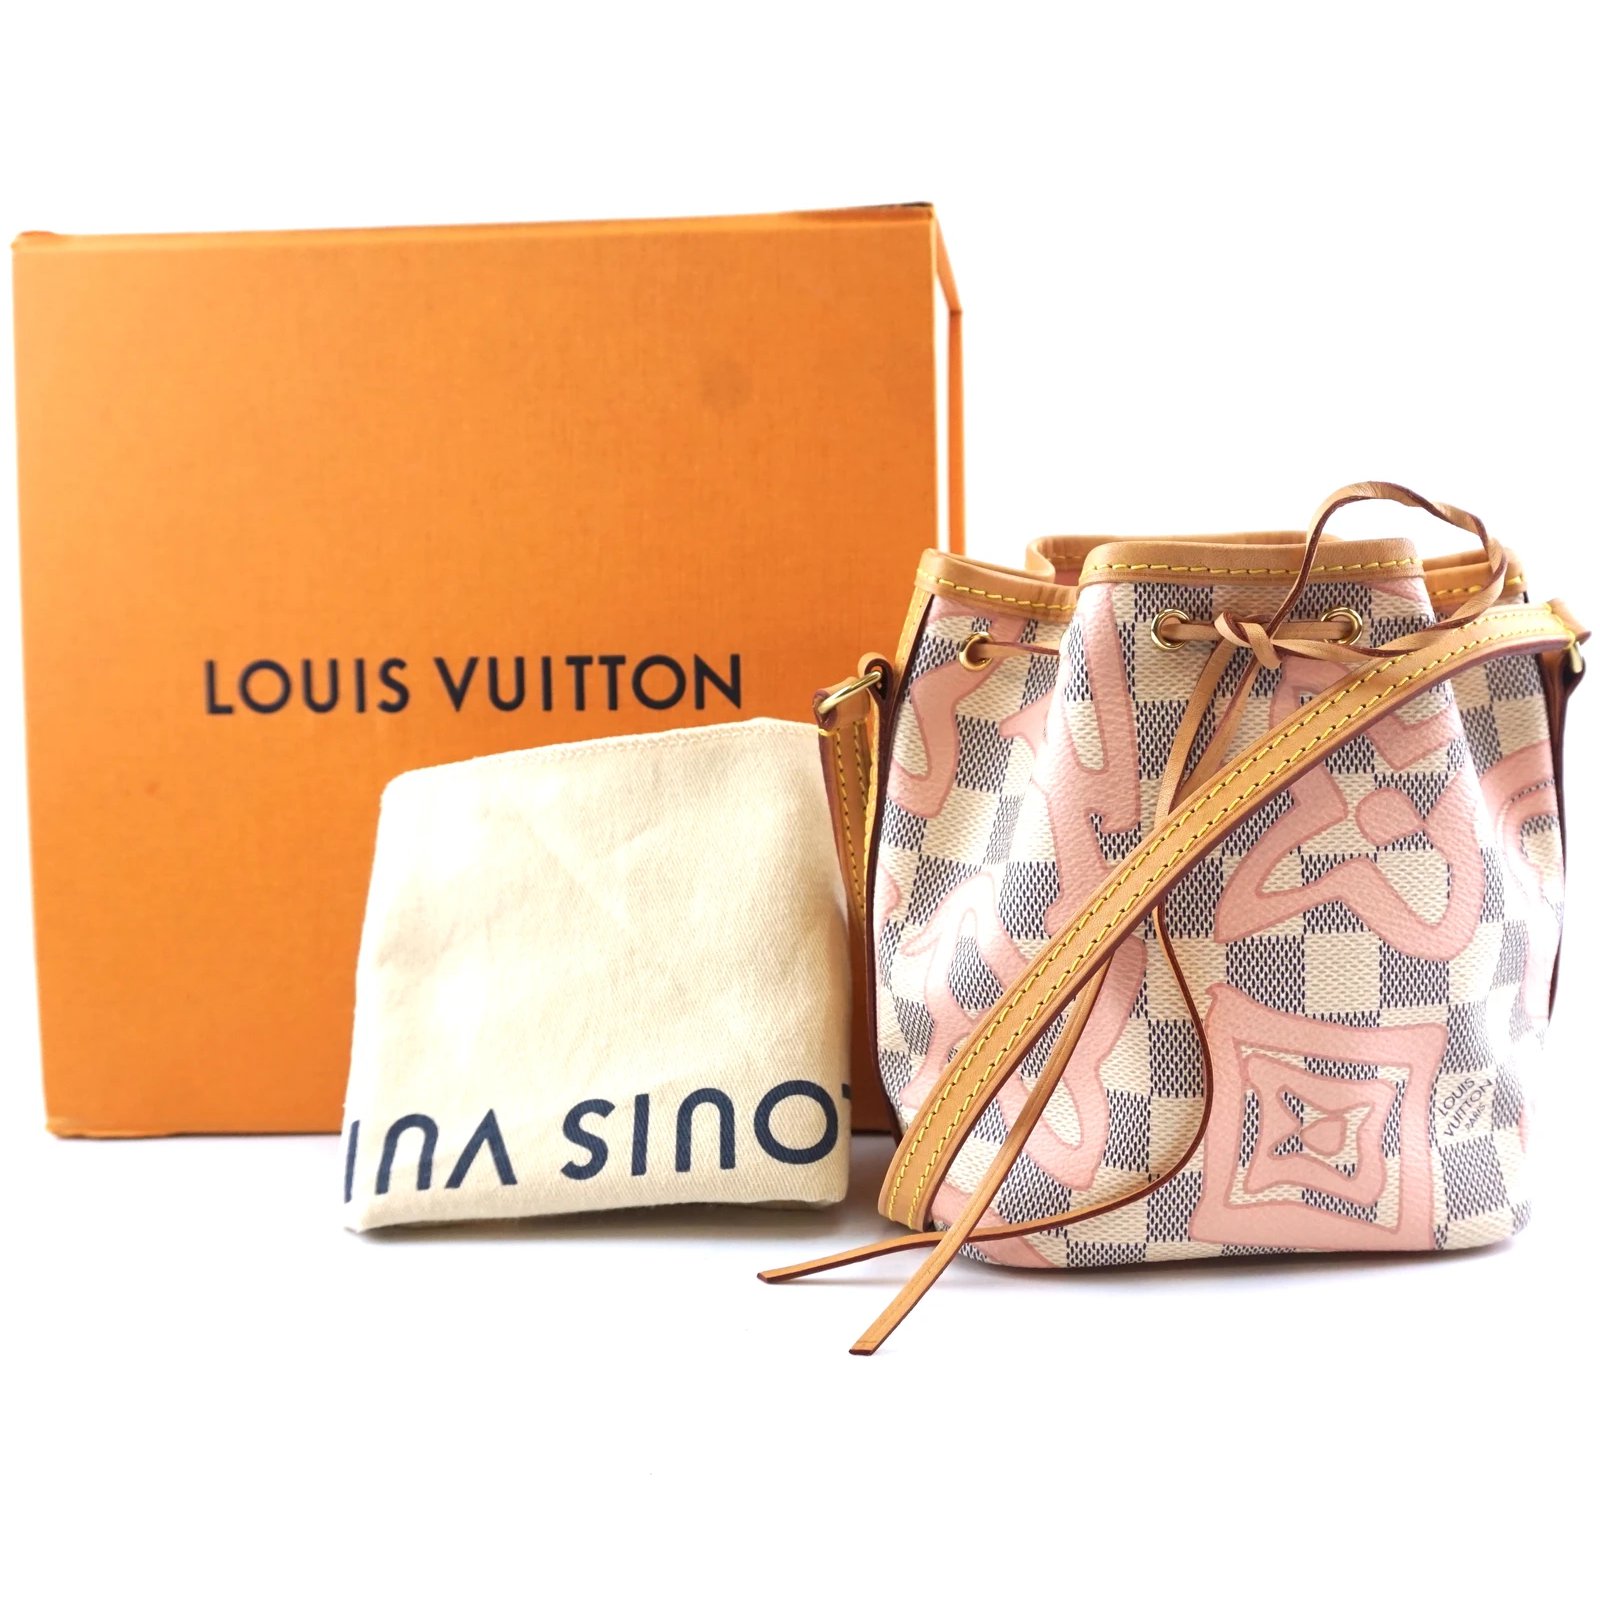 Pin on Cheap Louis Vuitton Handbags